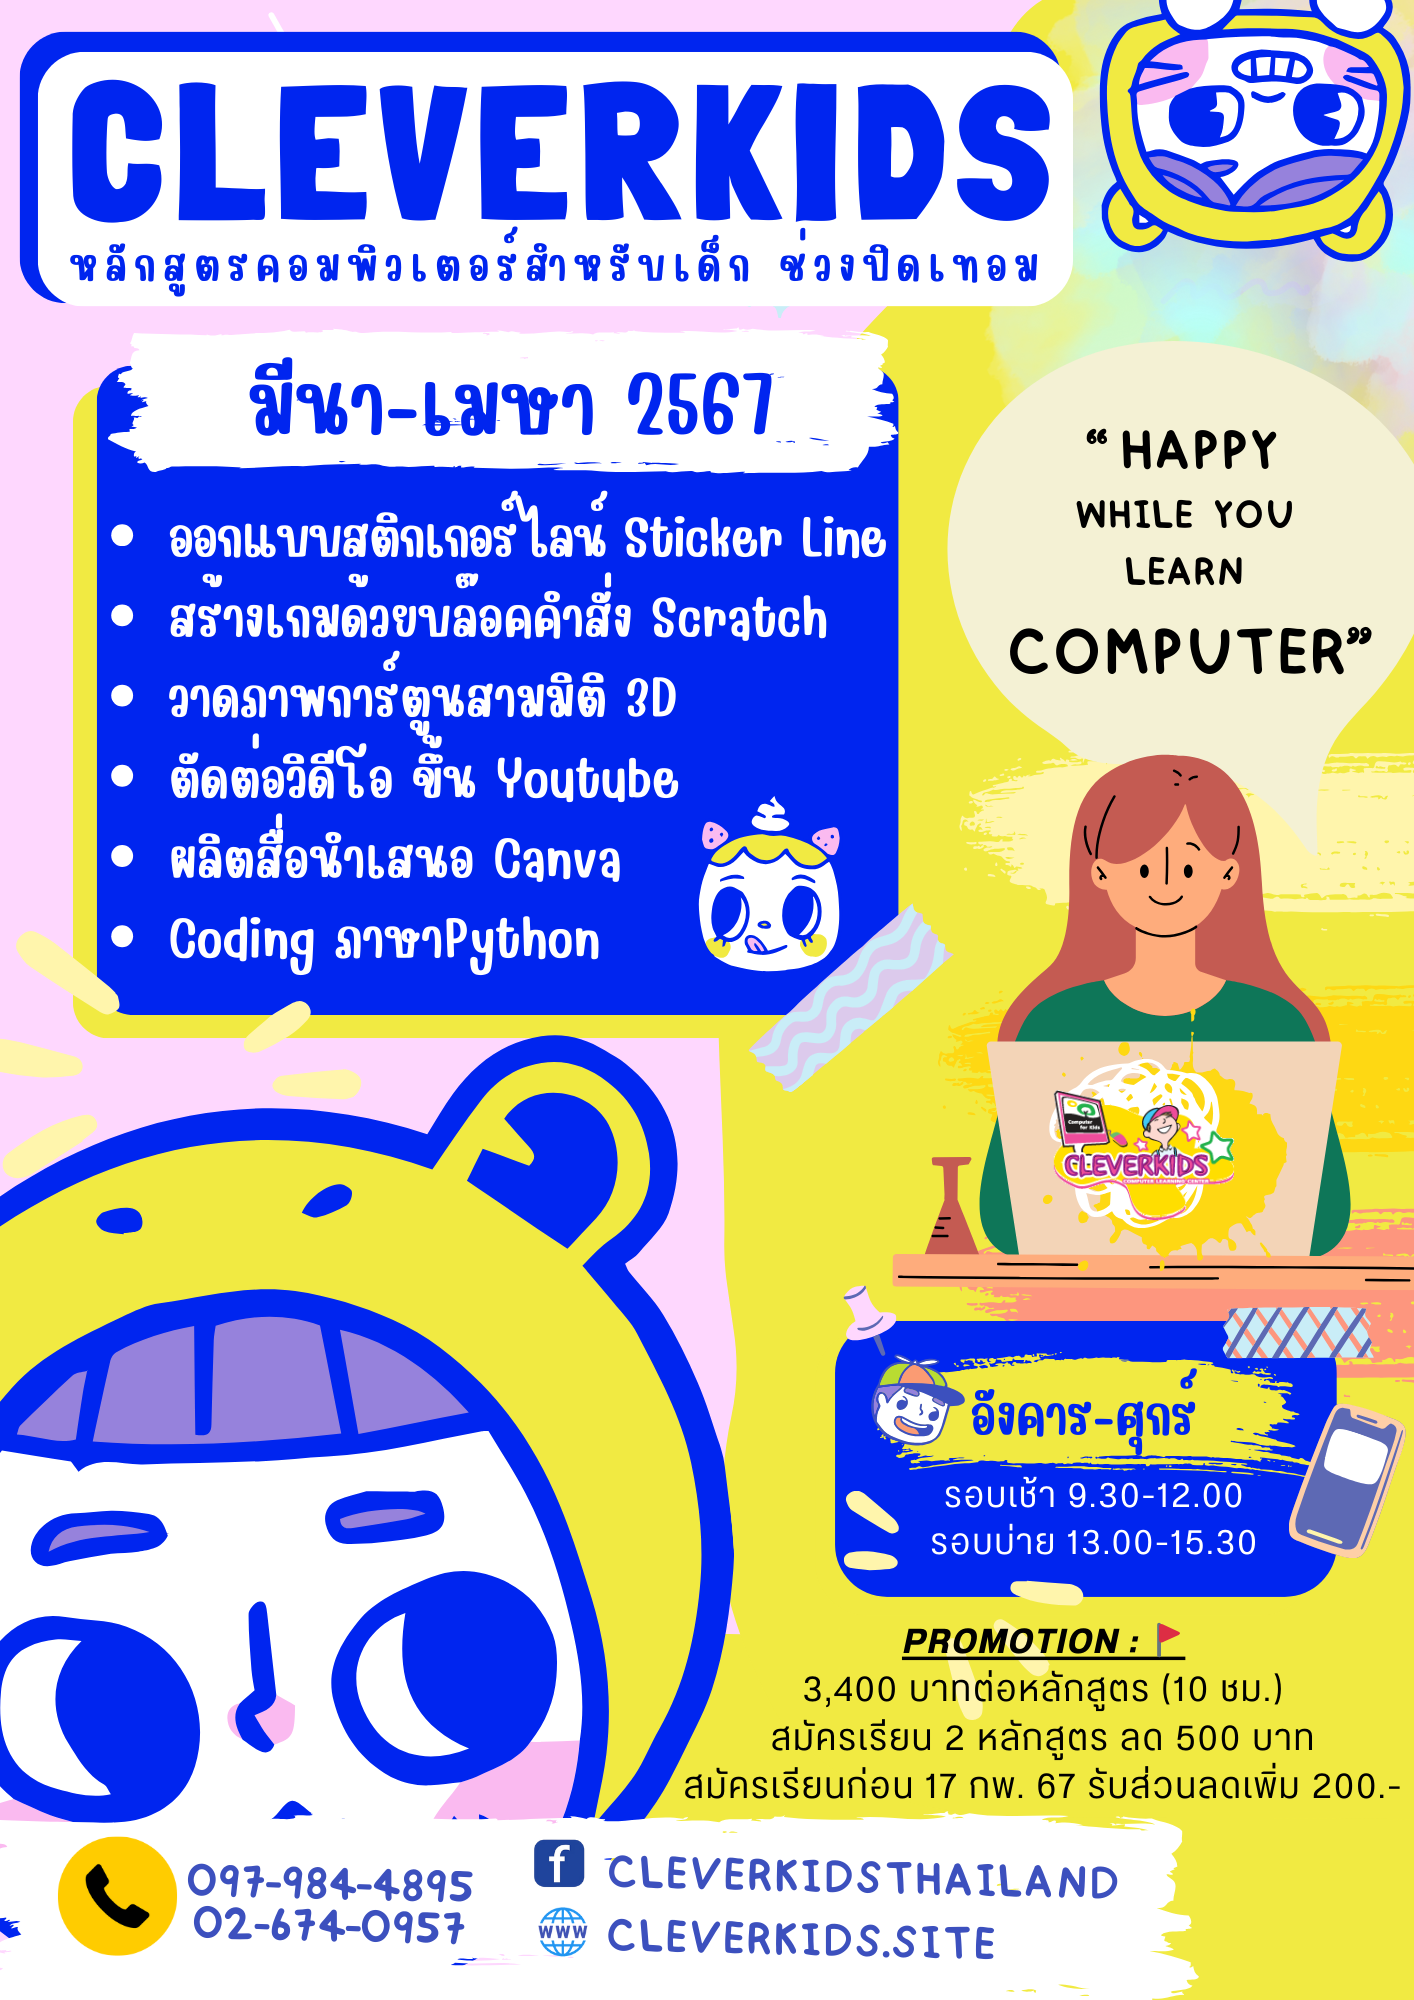 CLEVERKIDS ศูนย์อบรมคอมพิวเตอร์สำหรับเด็ก “ Happy While You Learn Computer” เปิดรับสมัคร.......หลักสูตรคอมพิวเตอร์ช่วงปิดเทอม มีนาคม-เมษายน 2567